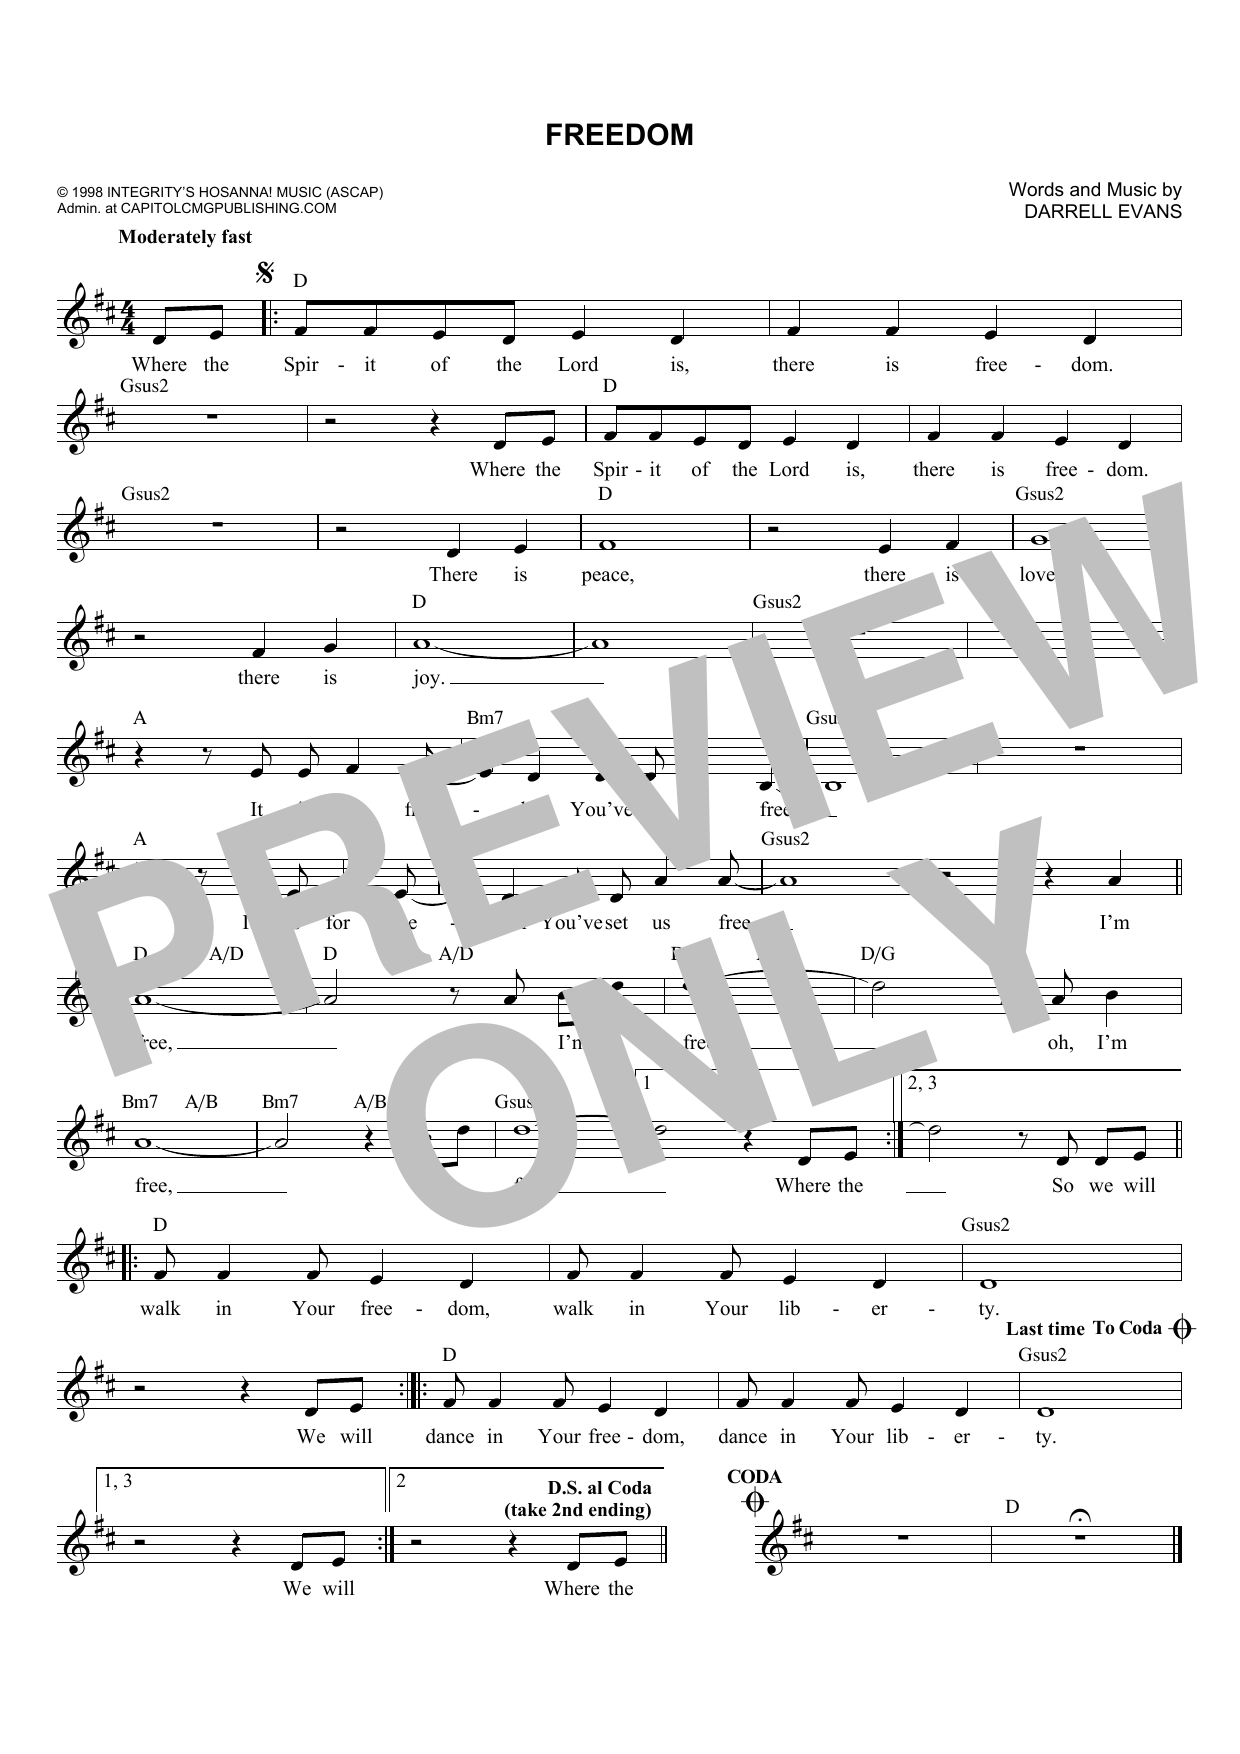 Download Darrell Evans Freedom Sheet Music